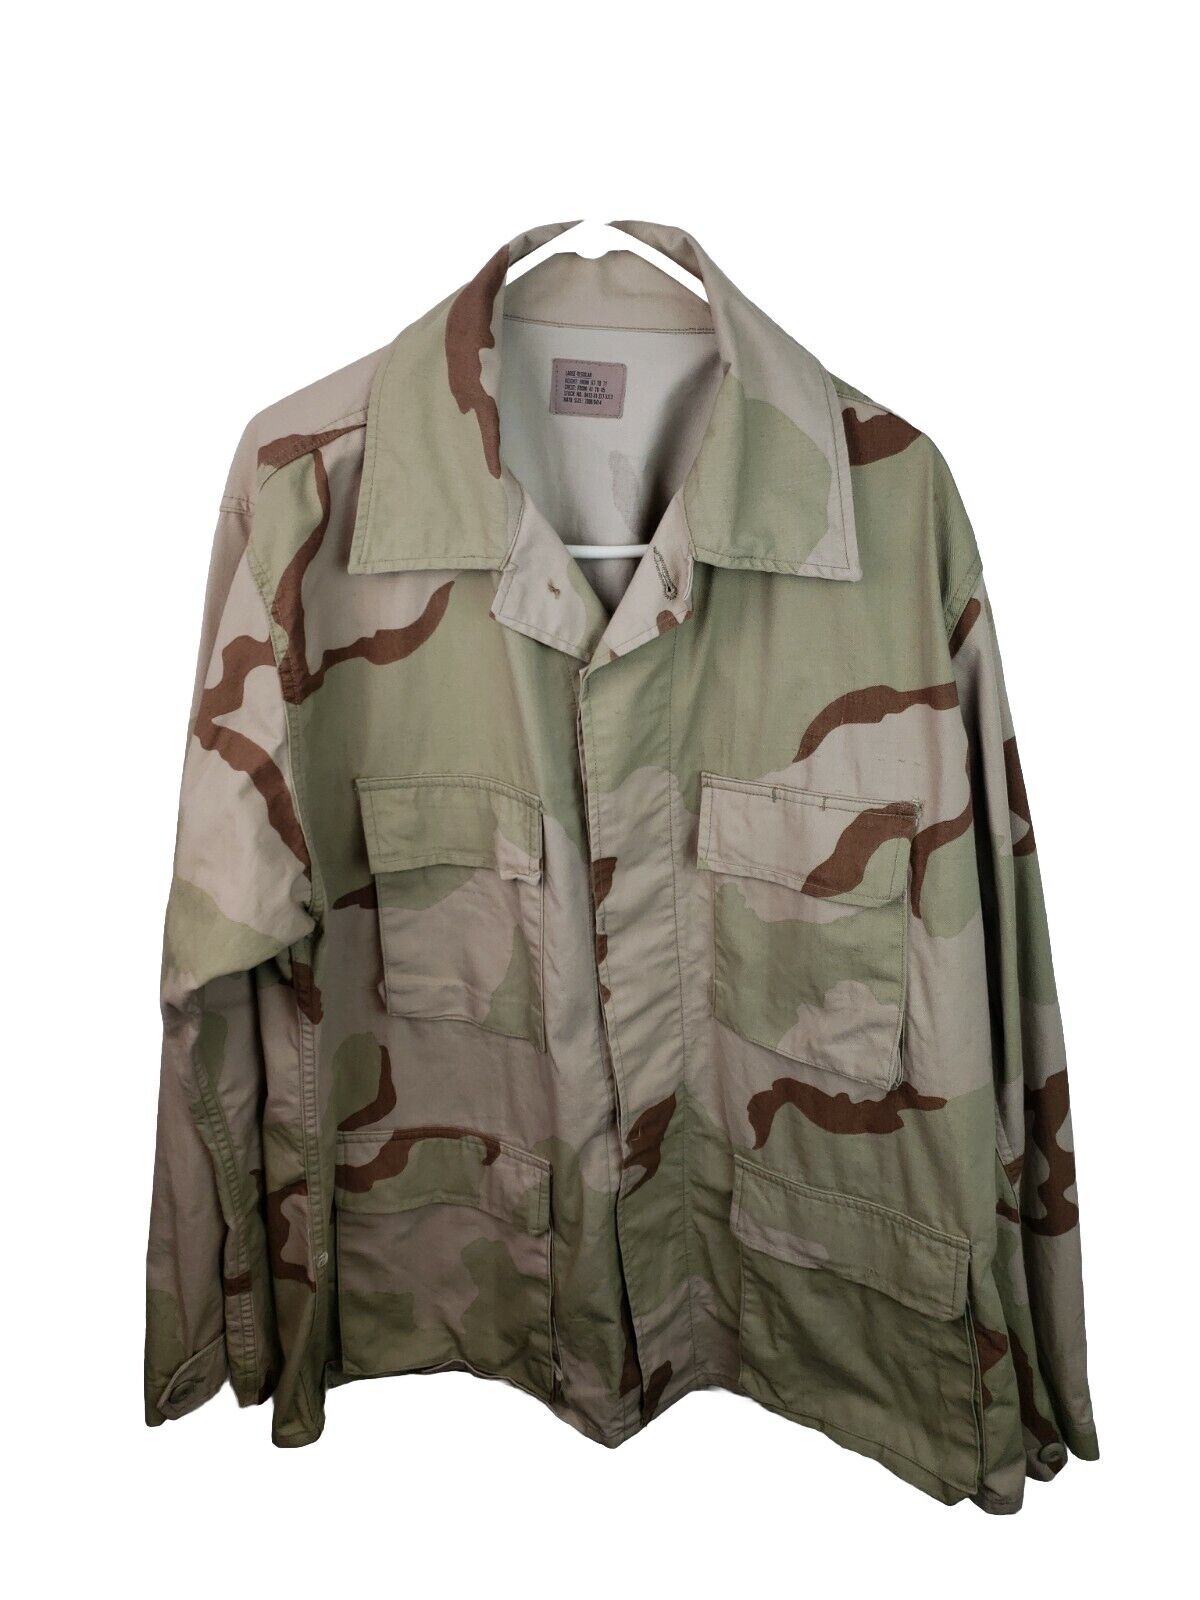 Official USAF Air Force BDU Uniform Desert Camouflage Top Size Large Regular 